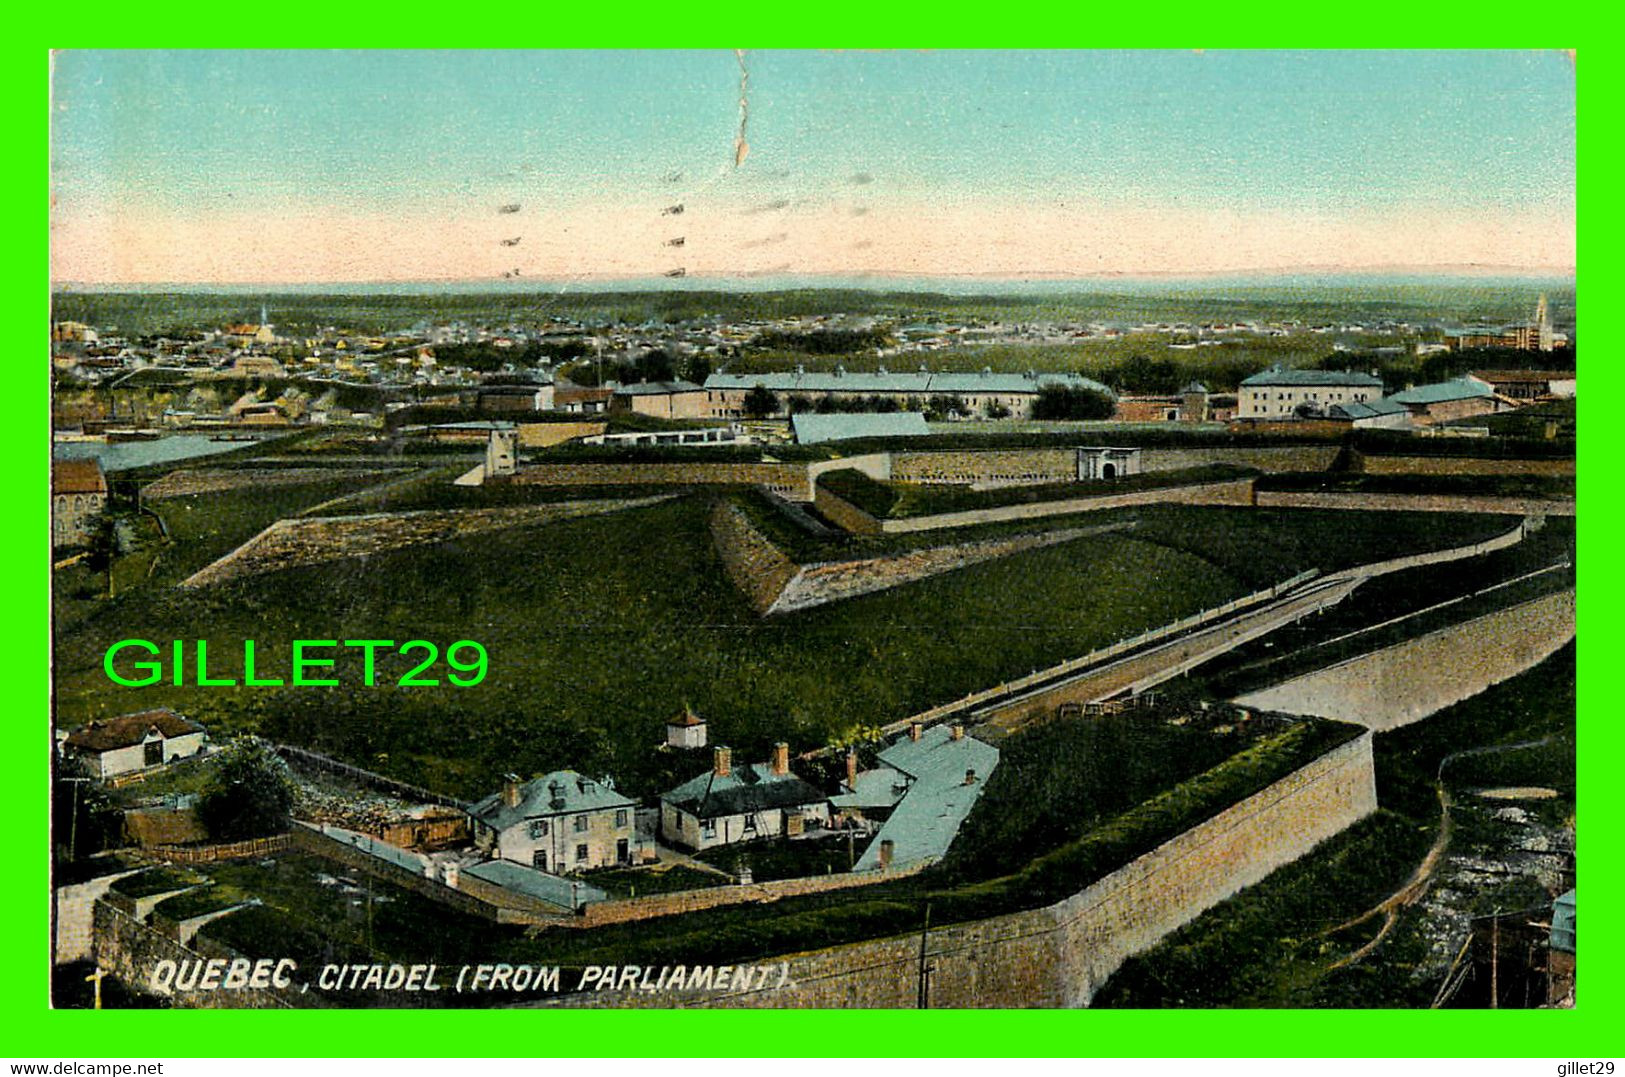 QUÉBEC - VIEW OF THE CITADEL FROM PARLIAMENT - ILLUSTRATED POST CARD CO - TRAVEL IN 1908 - - Québec - La Citadelle